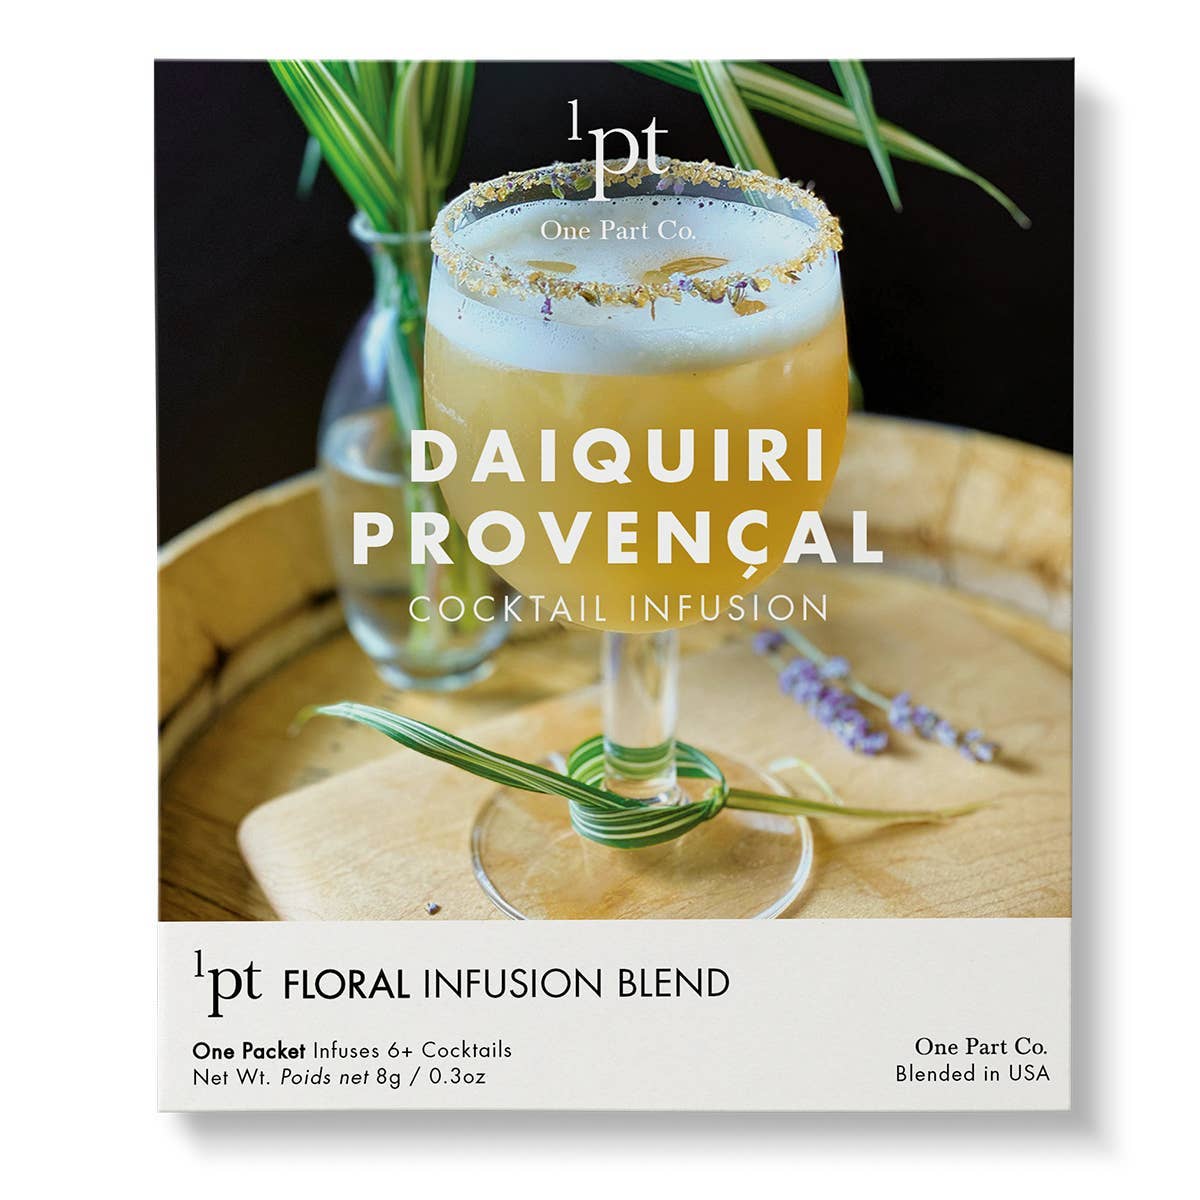 Daiquiri Provencal Cocktail Infusion Kit